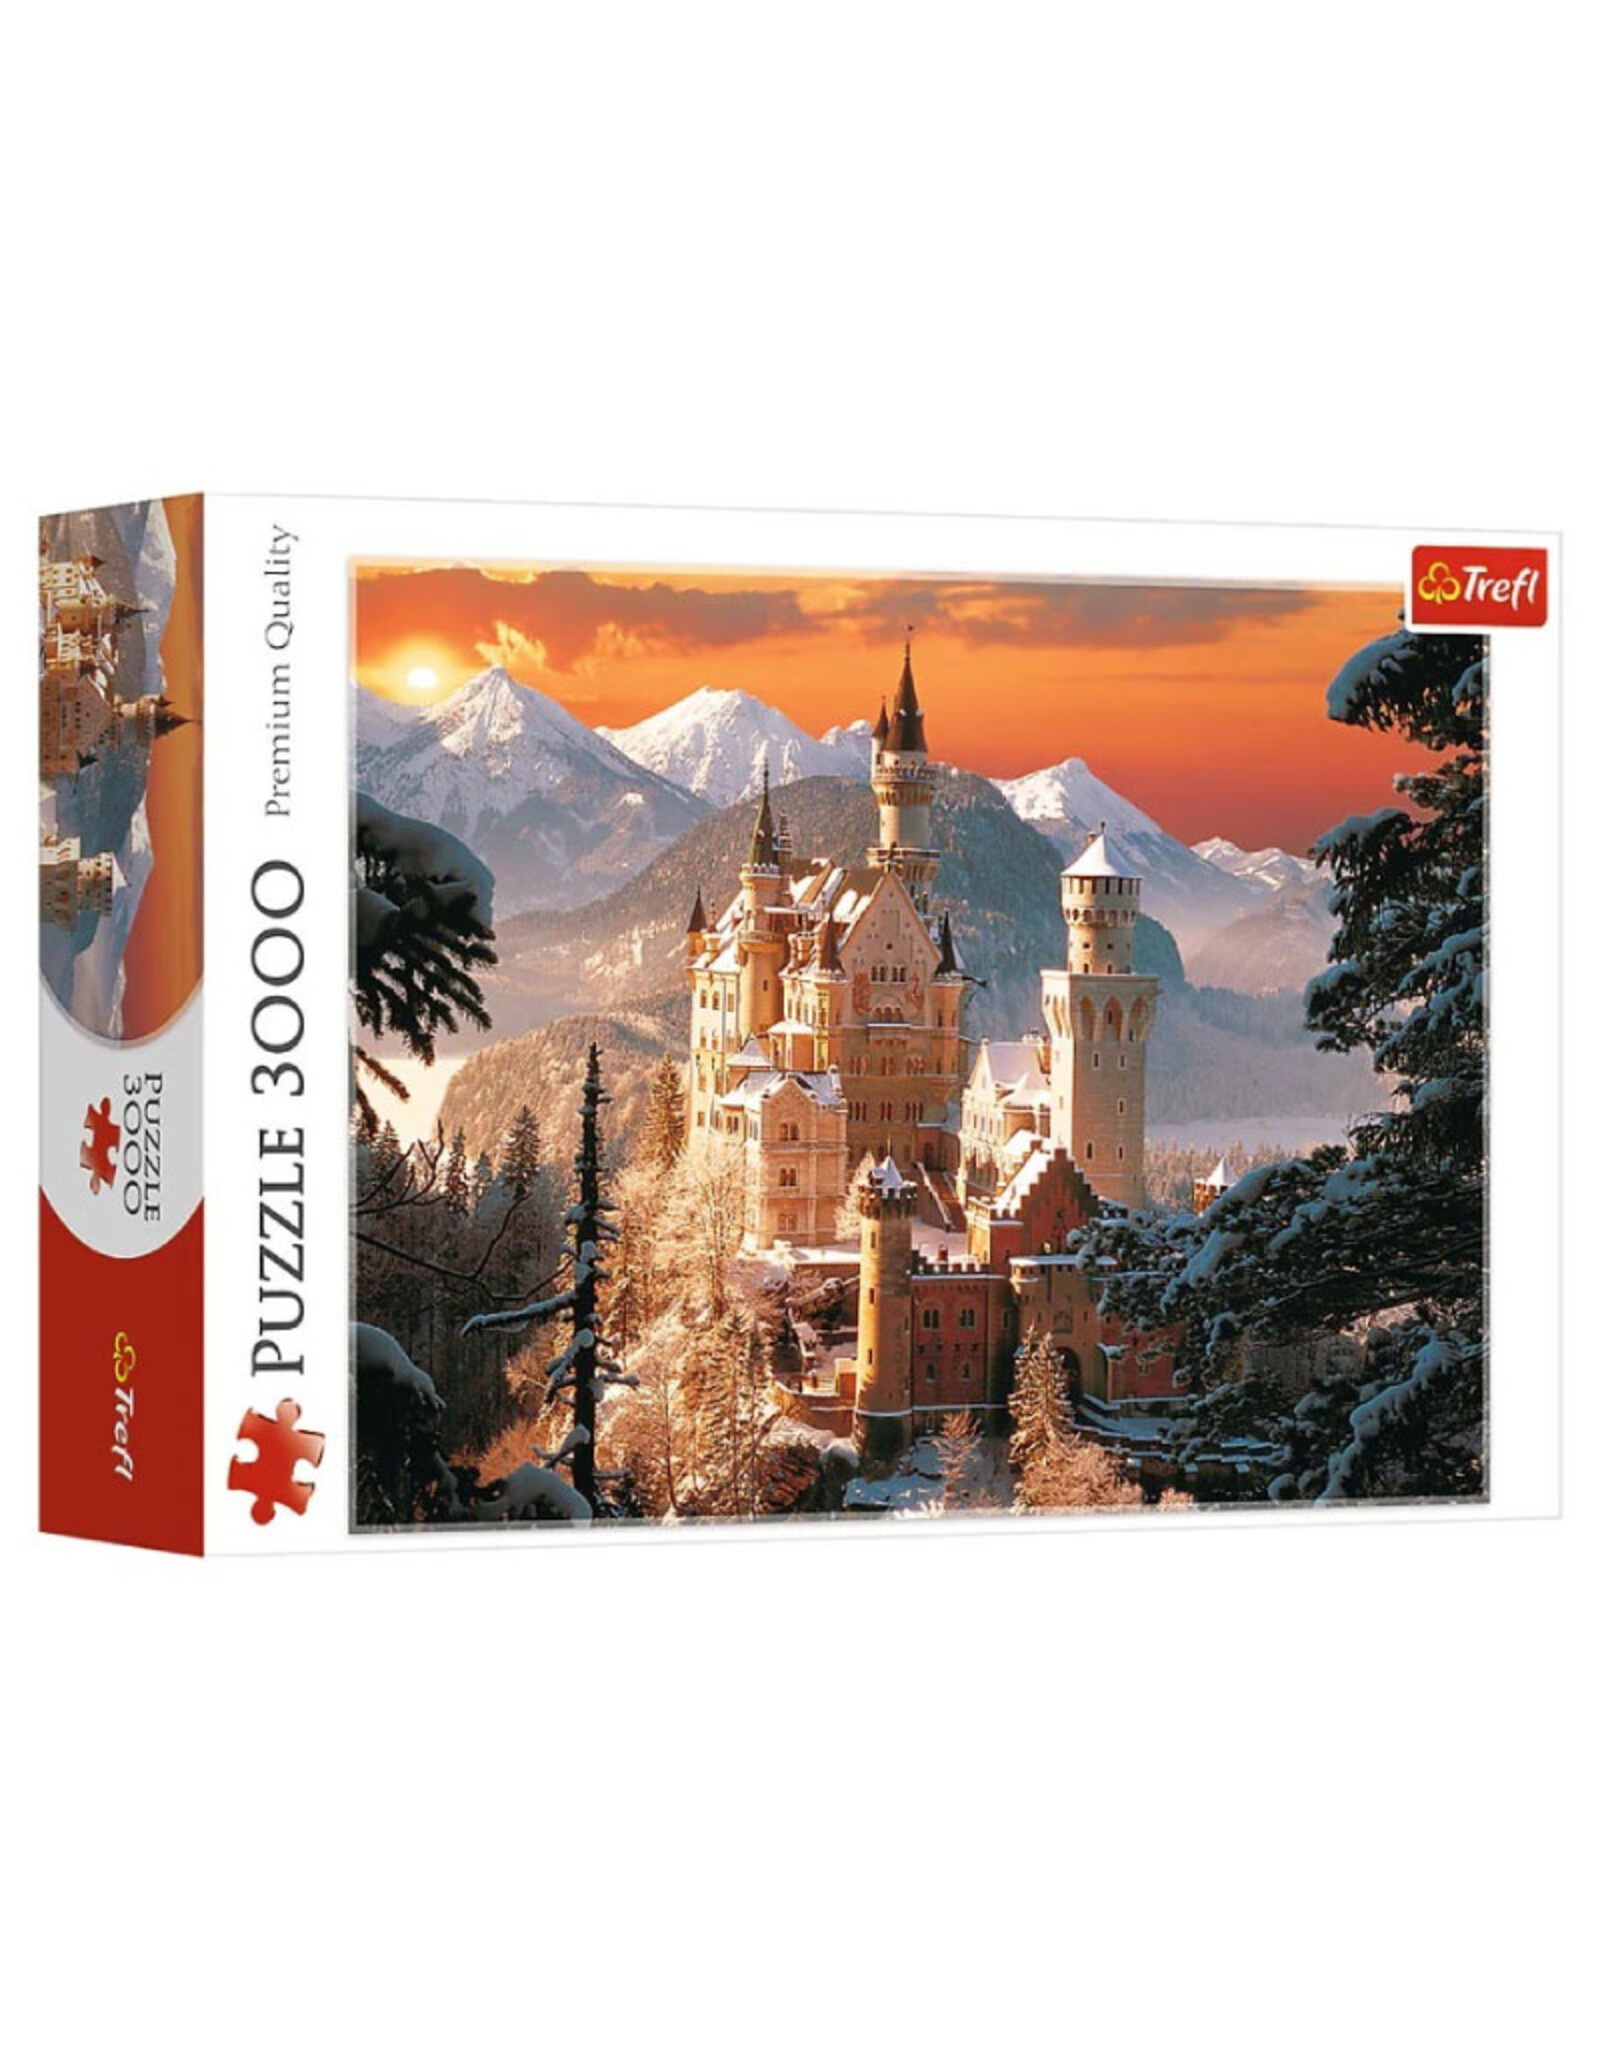 Trefl Neuschwanstein CastlePuzzle 3000 PCS